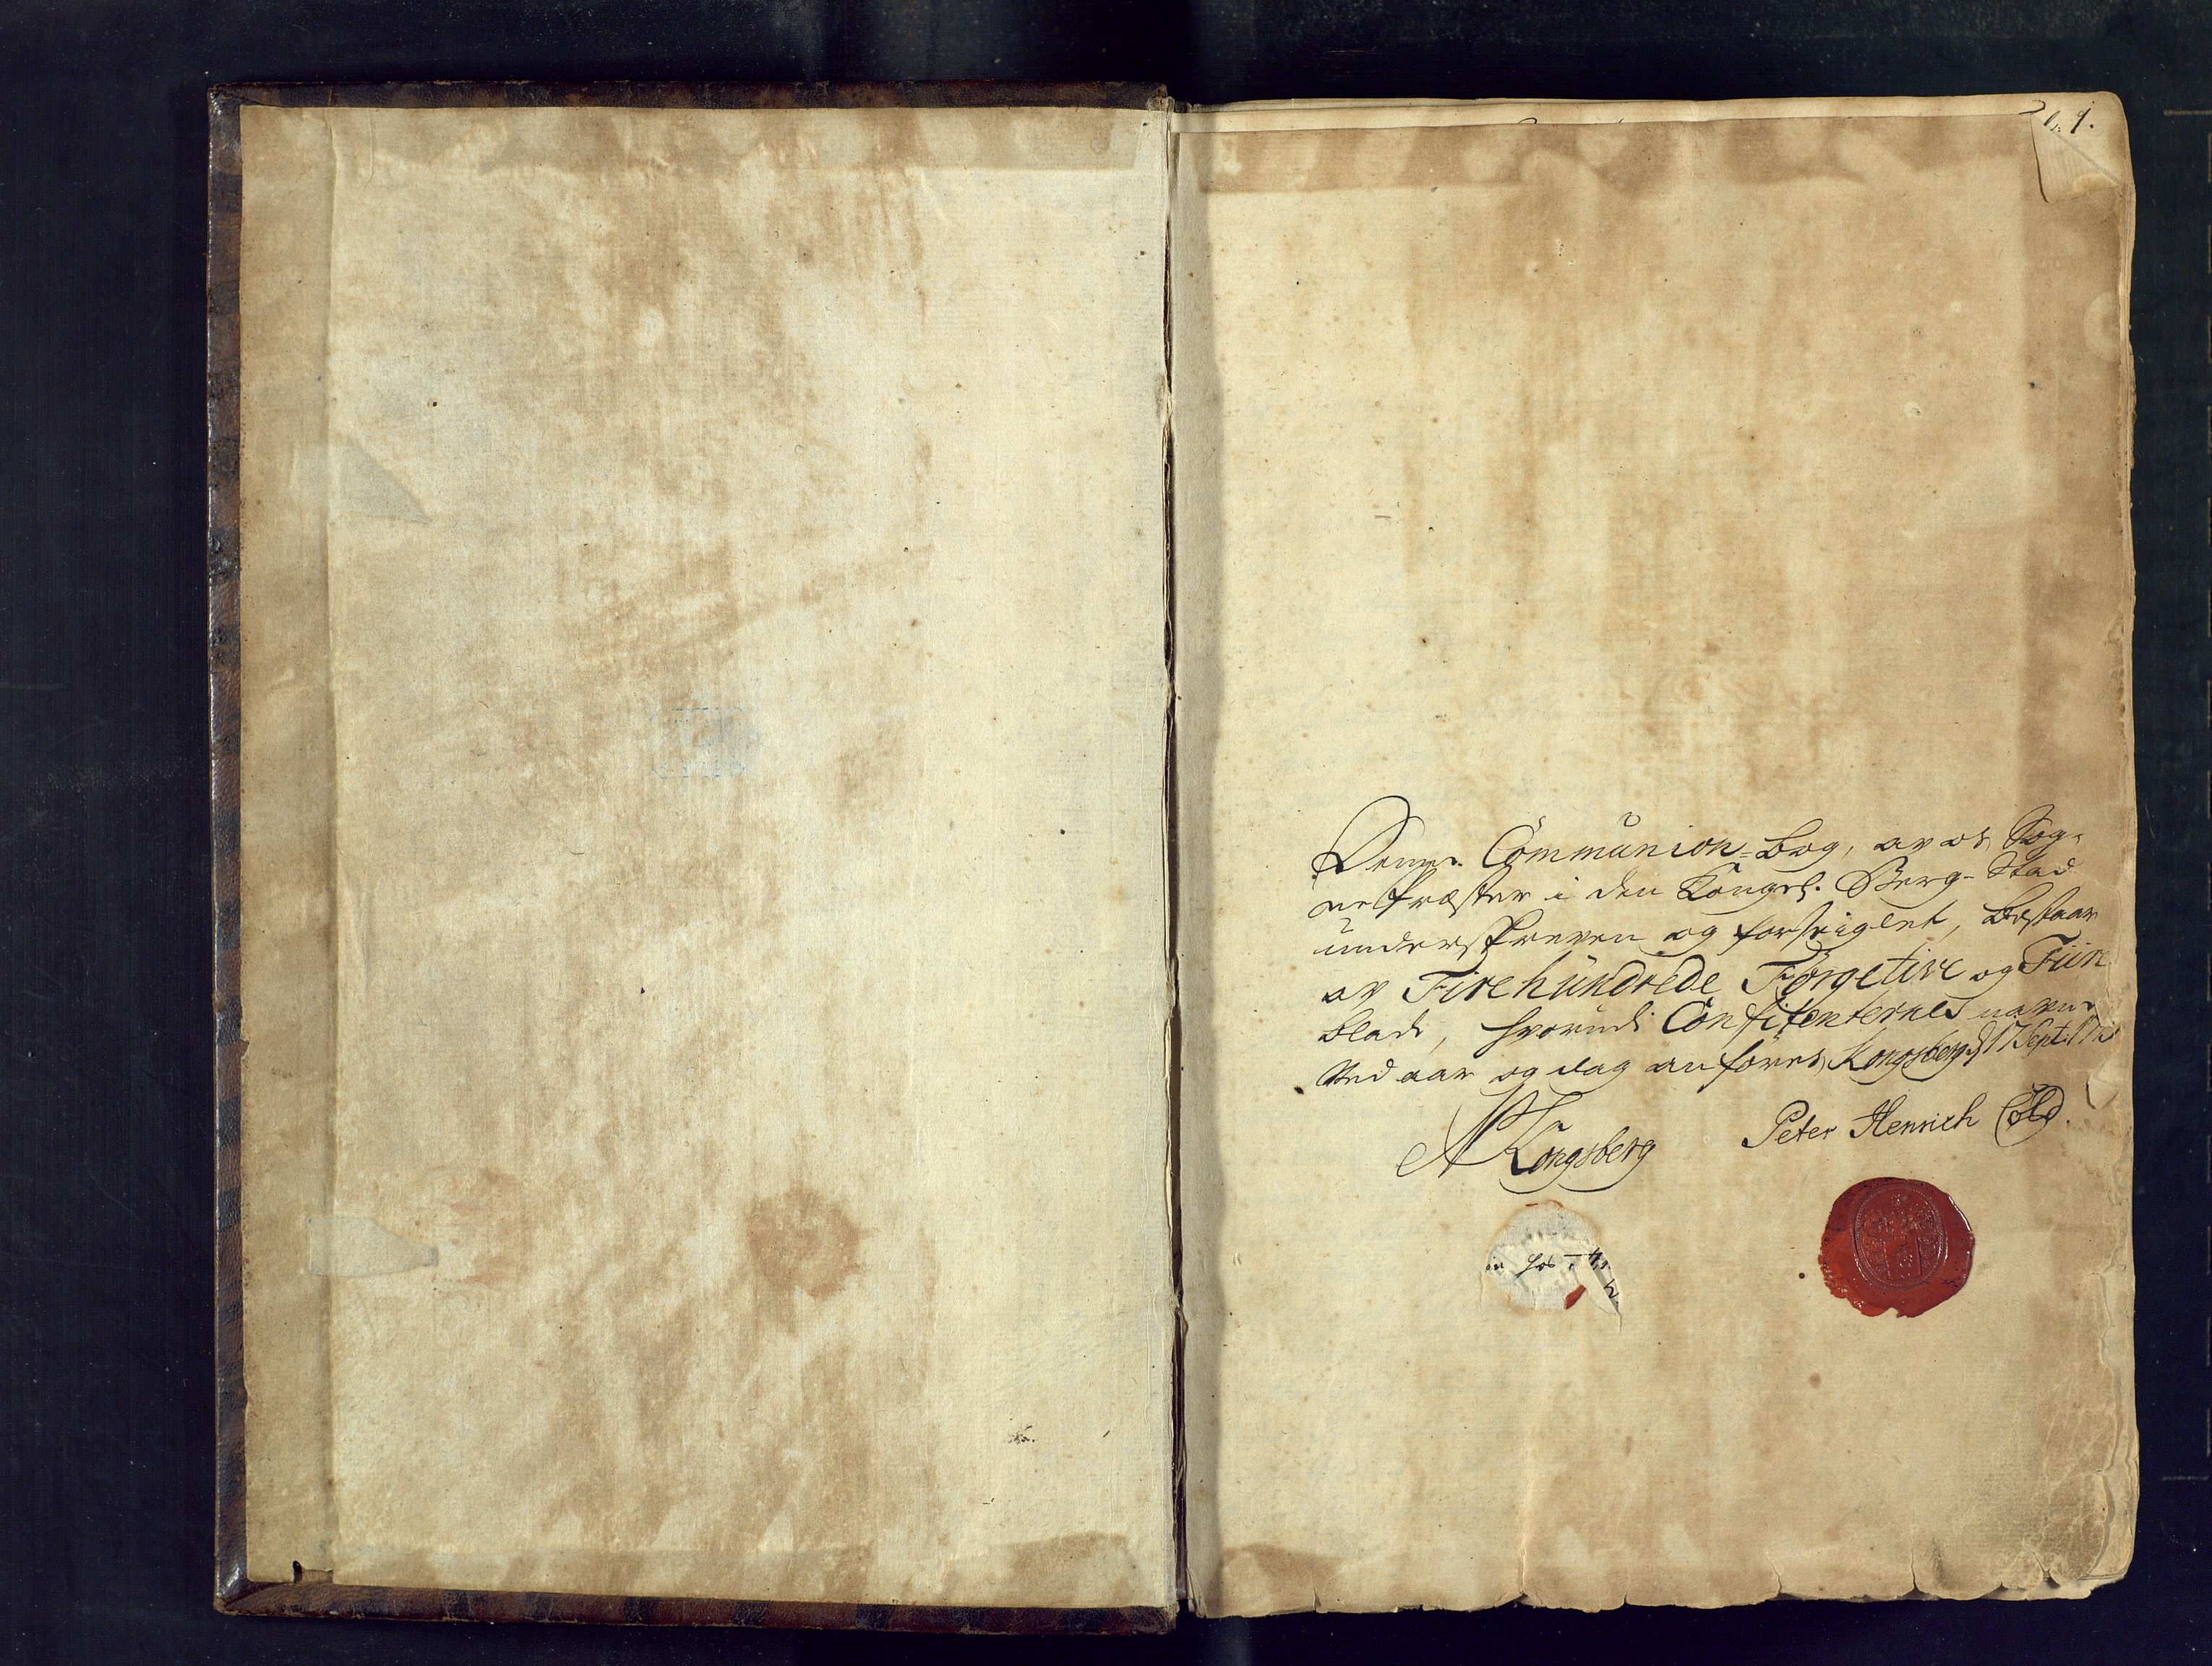 Kongsberg kirkebøker, SAKO/A-22/M/Ma/L0003: Kommunikantprotokoll nr. 3, 1745-1750